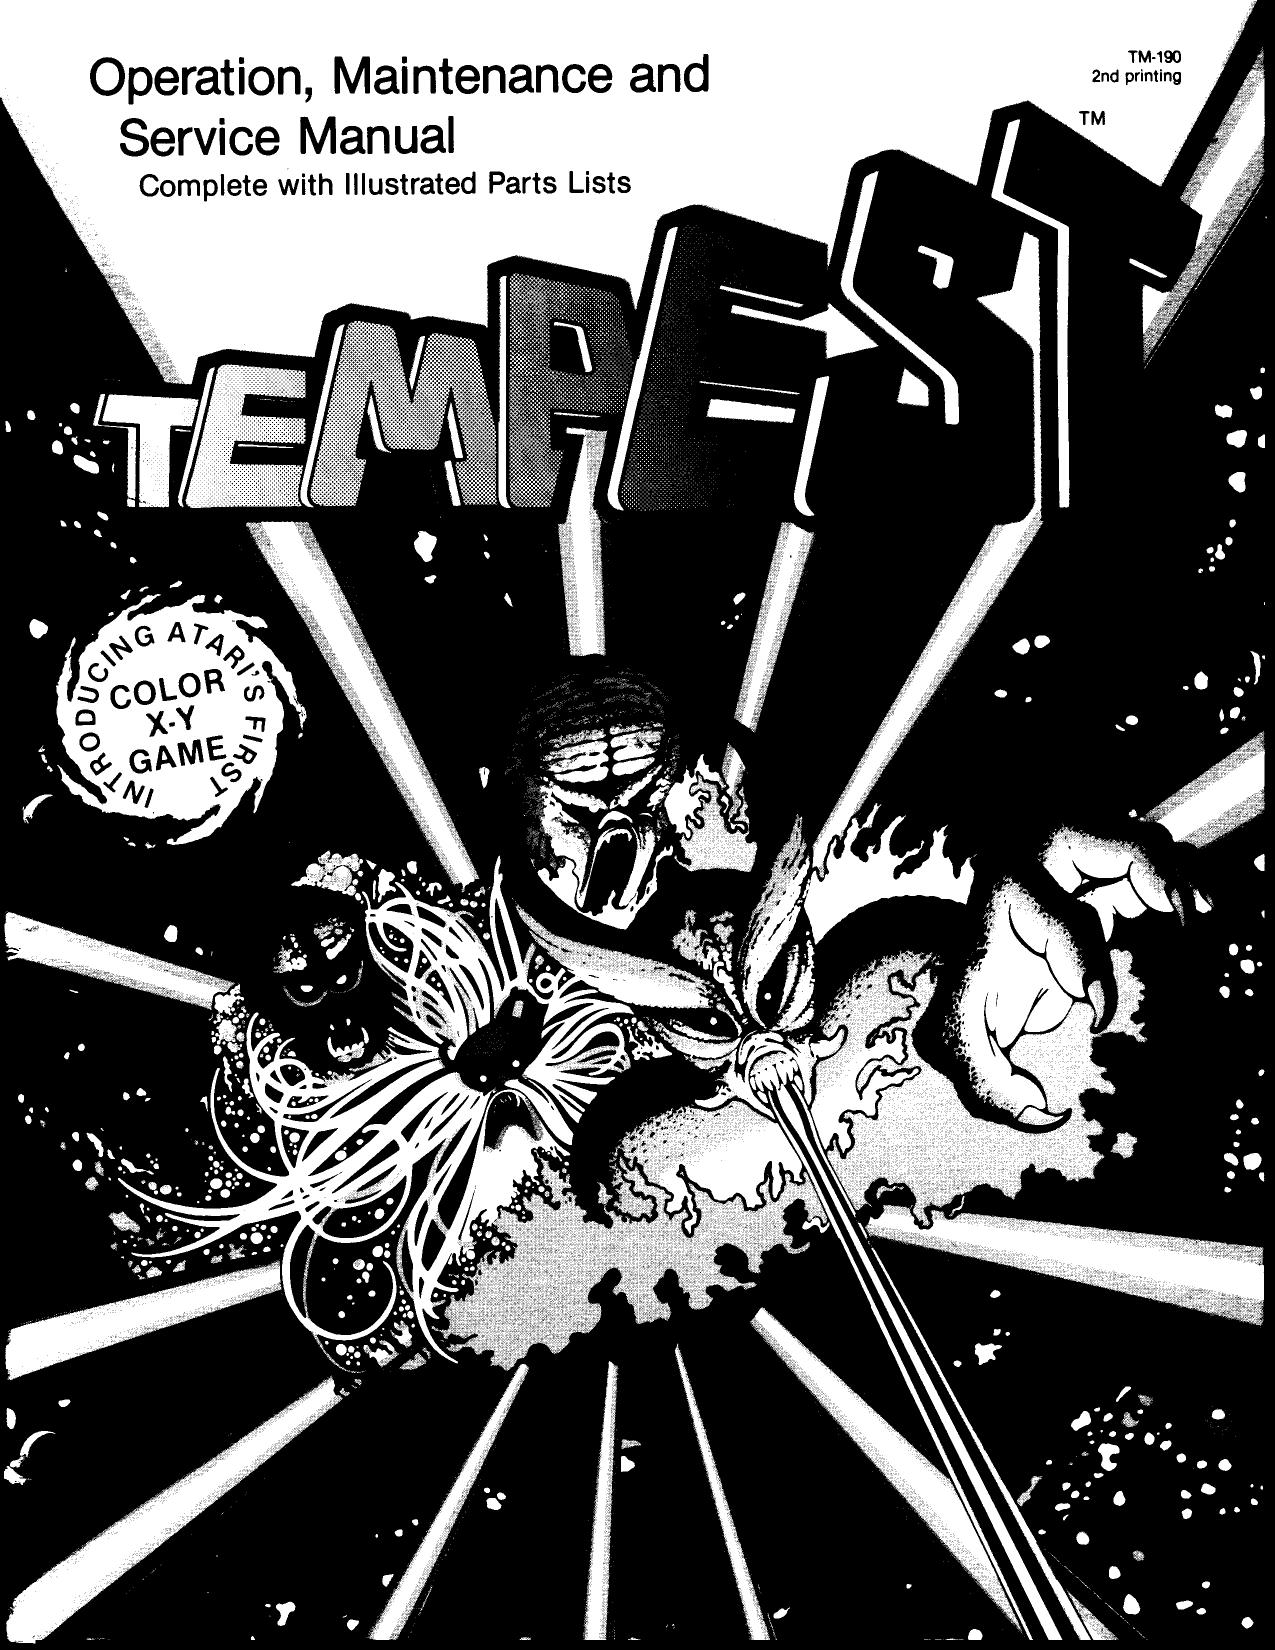 Tempest TM-190 2nd Printing